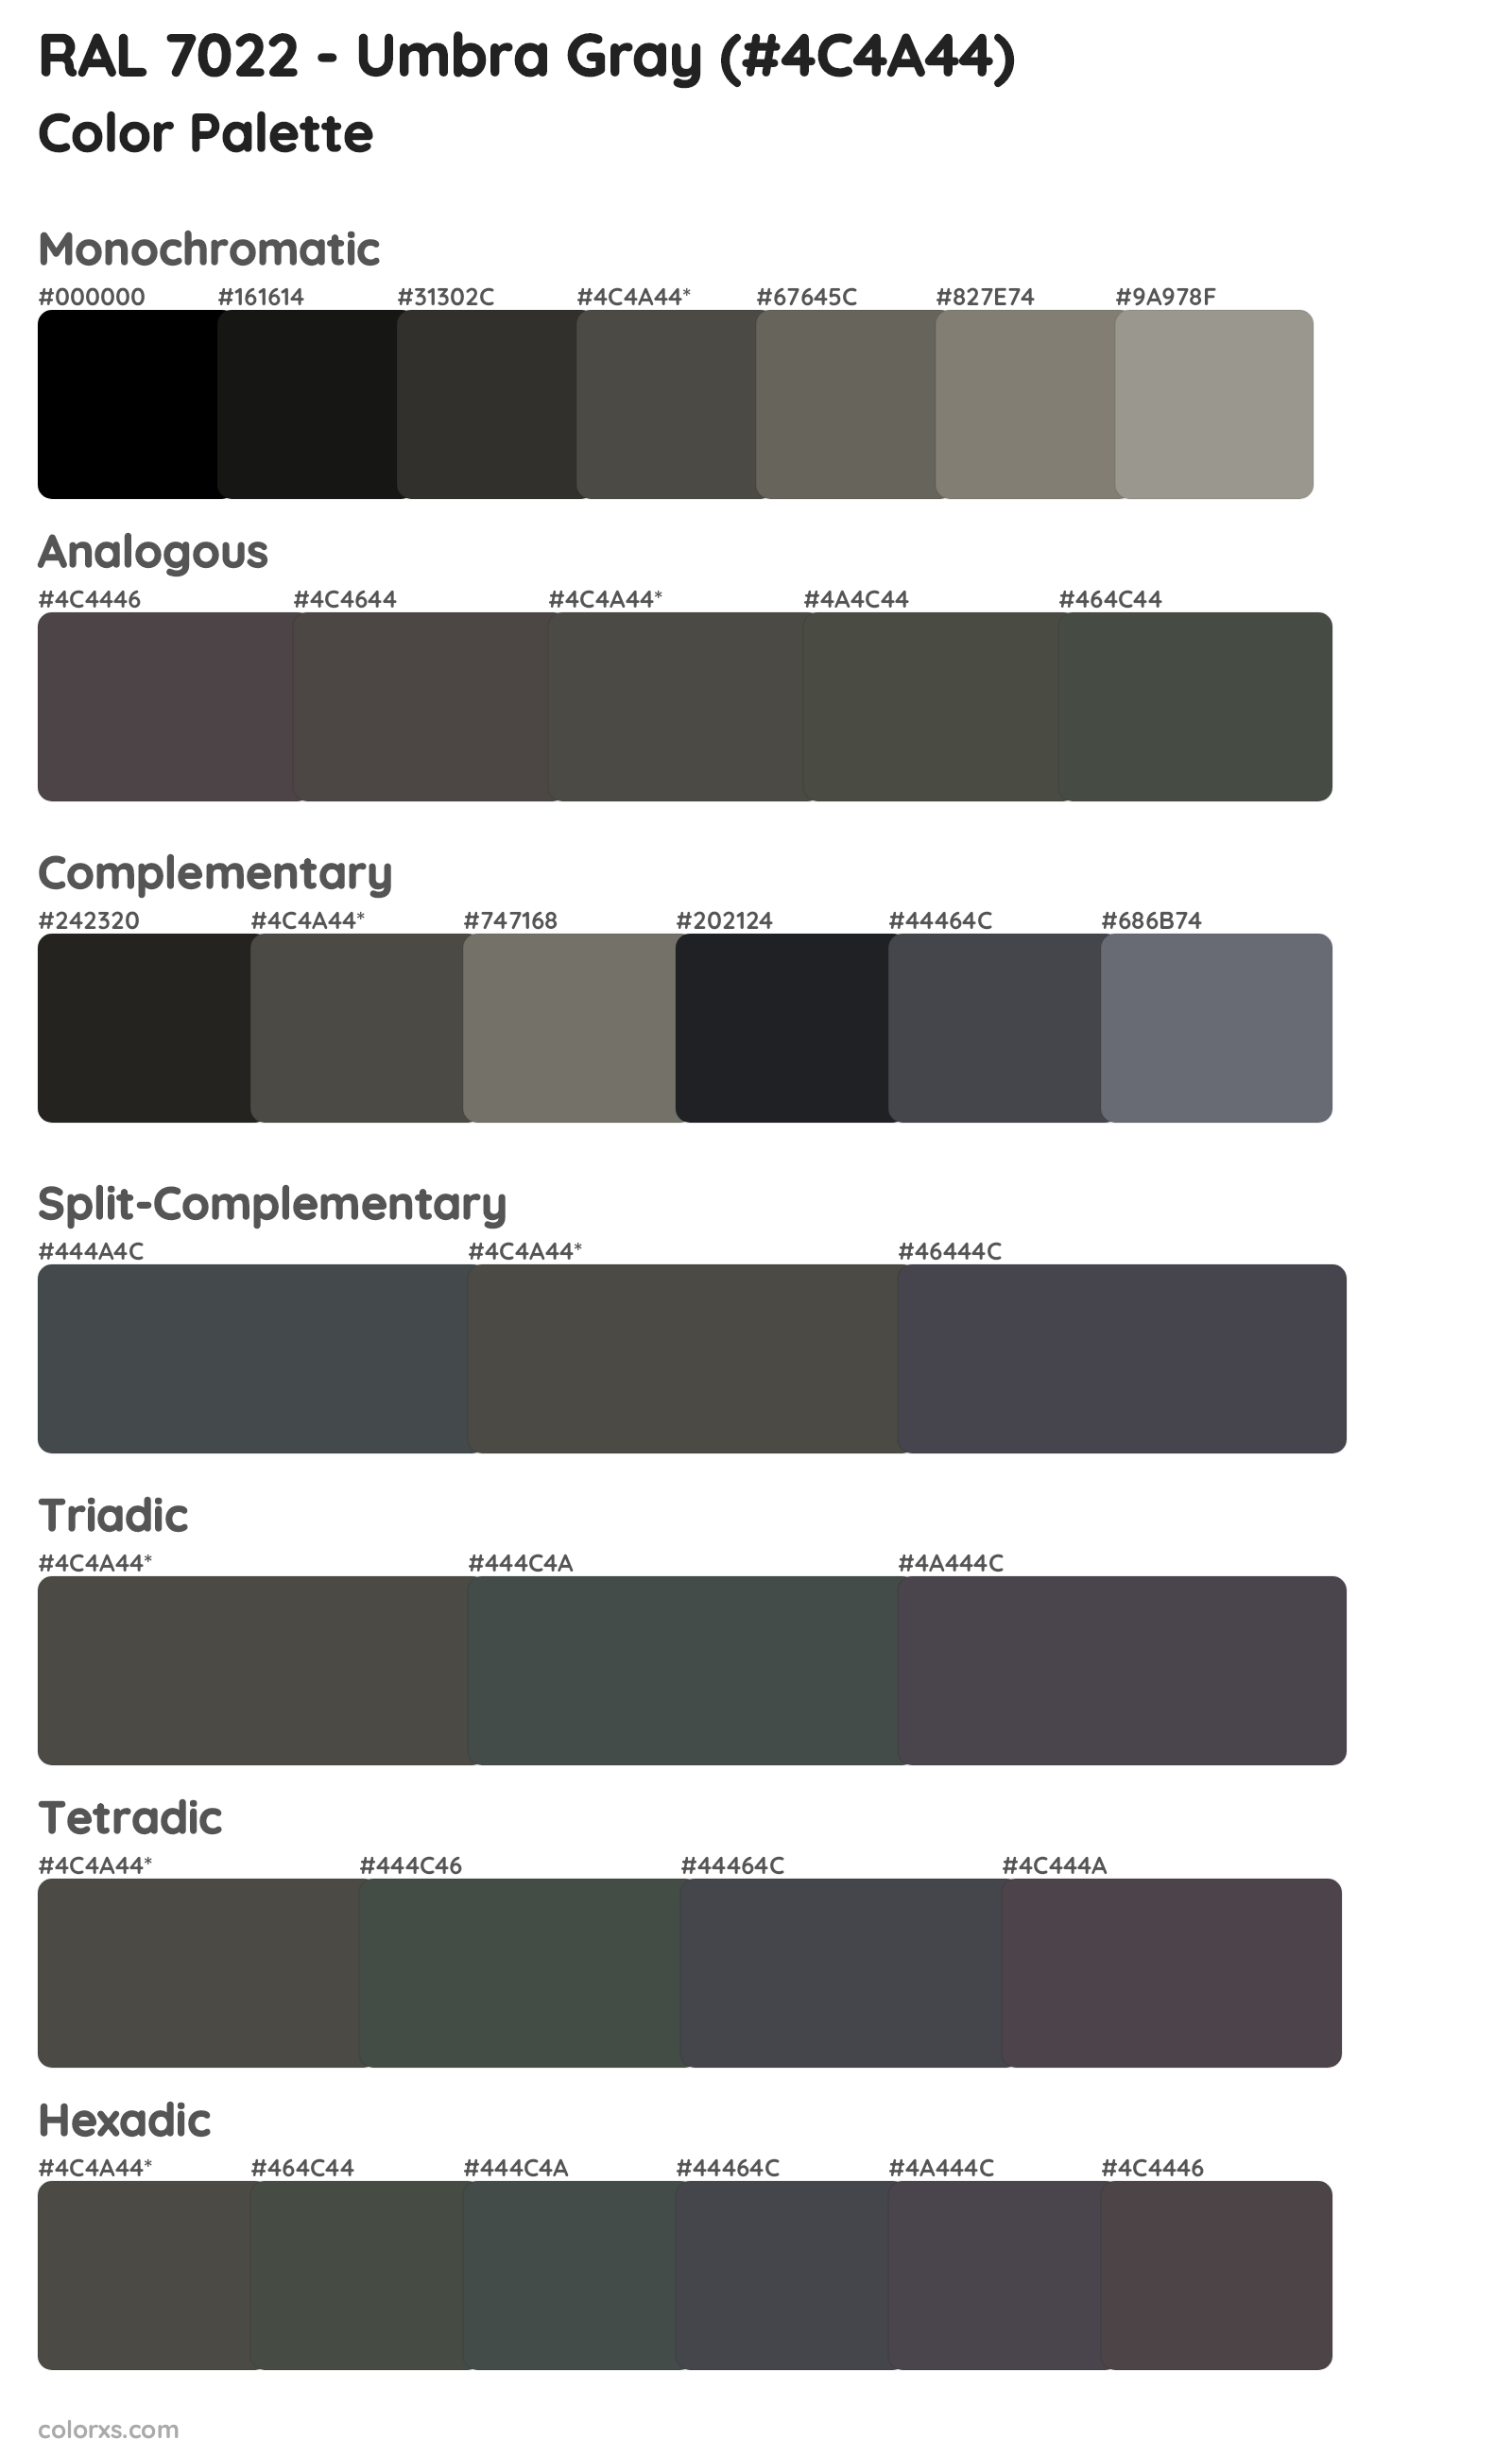 RAL 7022 - Umbra Gray Color Scheme Palettes